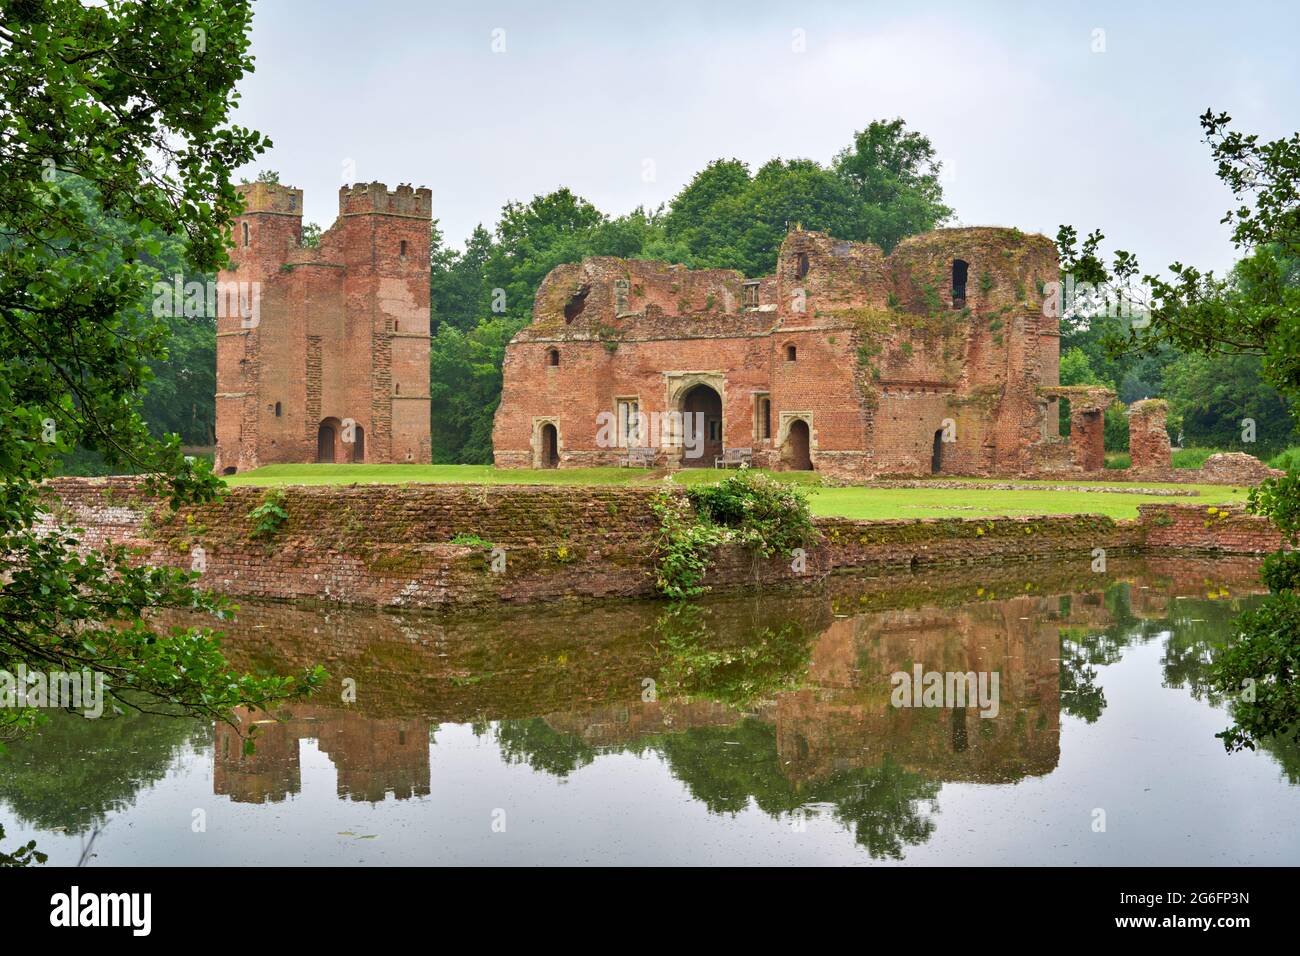 Kirby Muxloe Castle in Leicestershire, England. Stock Photo